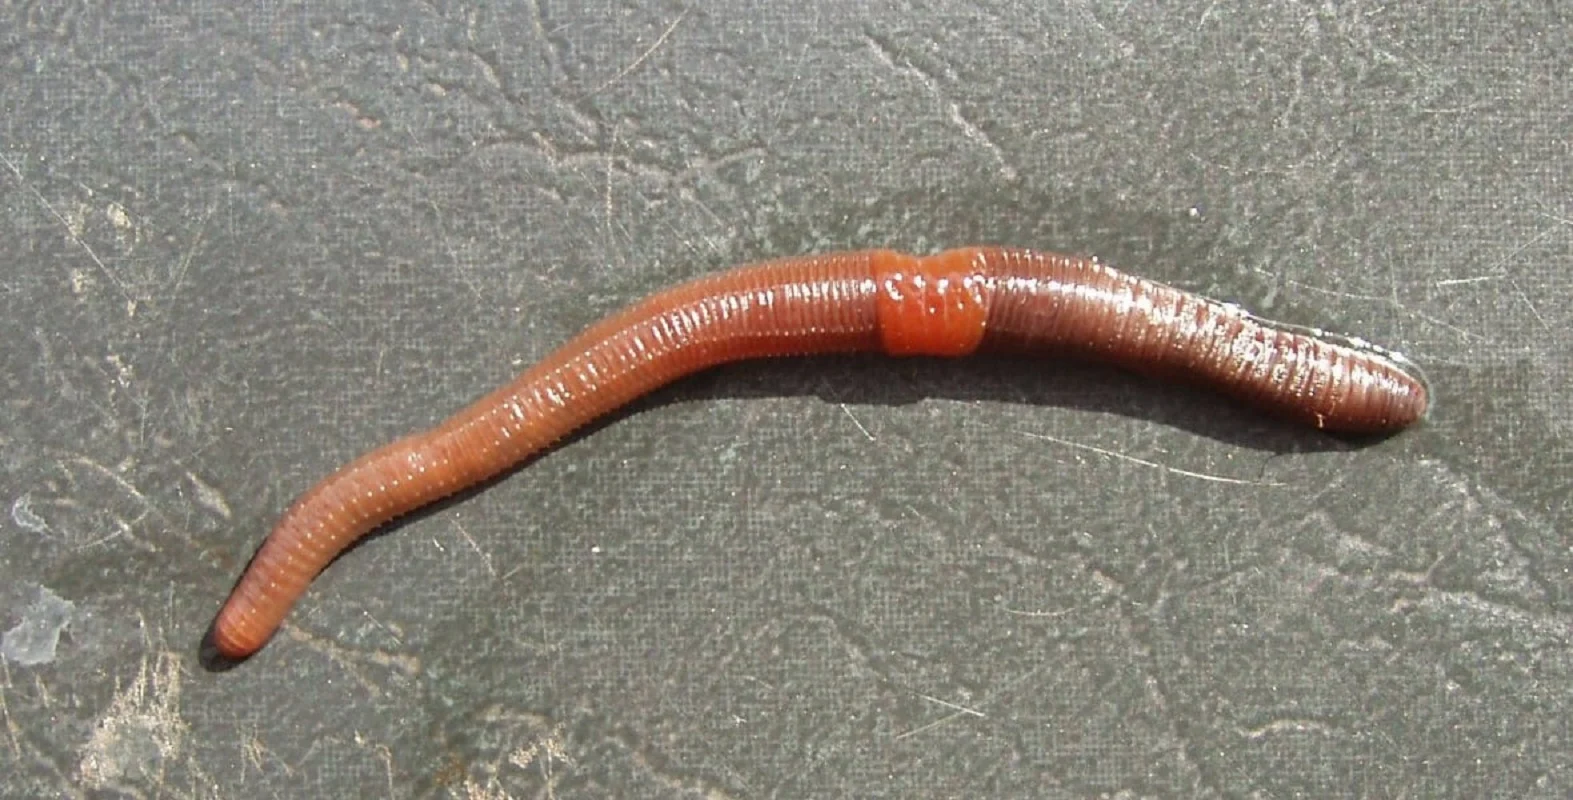 earthworms-dendrobaena-octaedra